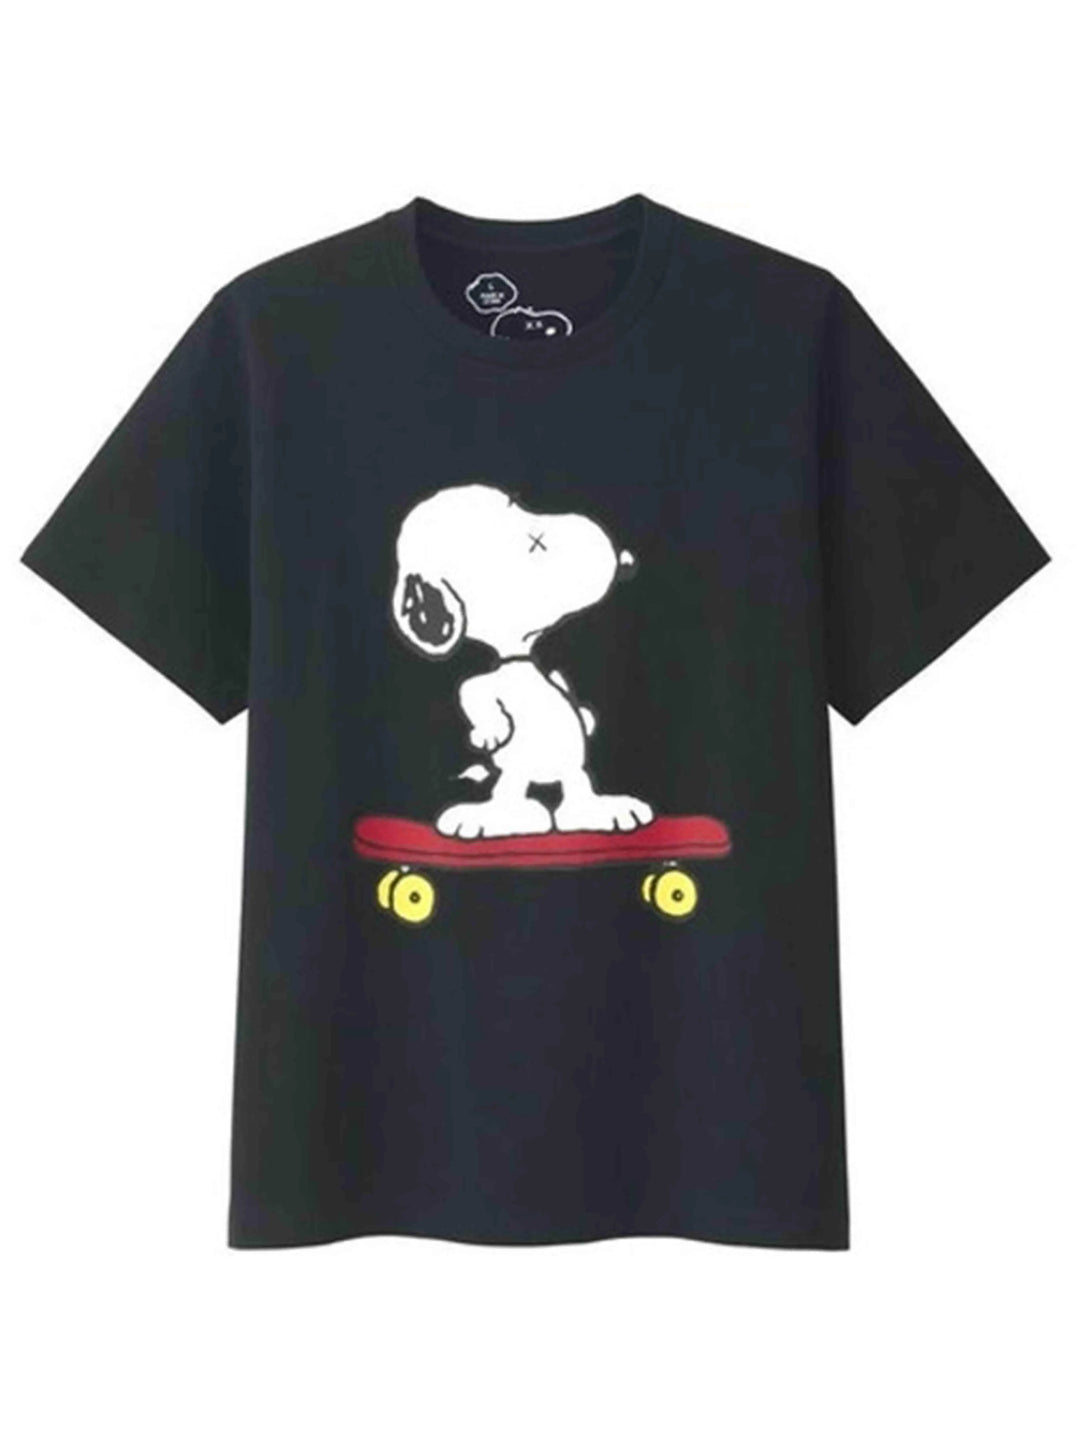 KAWS x Uniqlo x Peanuts Snoopy Skateboarding Tee (Japanese Sizing) Black Prior